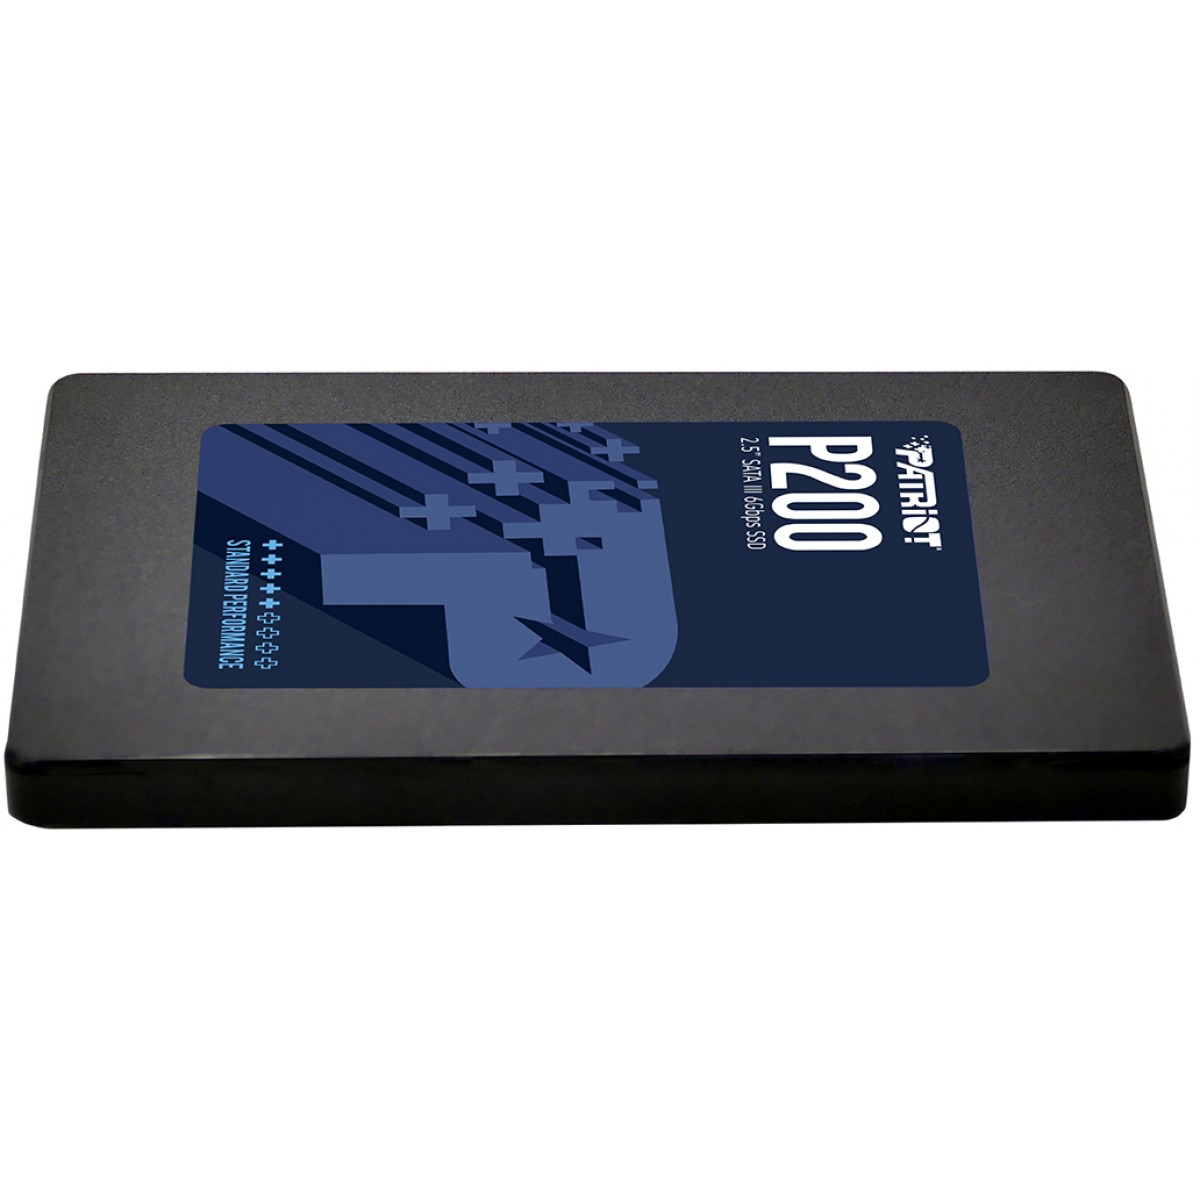 SSD Patriot P200, 128GB, Sata III, Leitura 500MBs e Gravação 430MBs, P200S128G25C